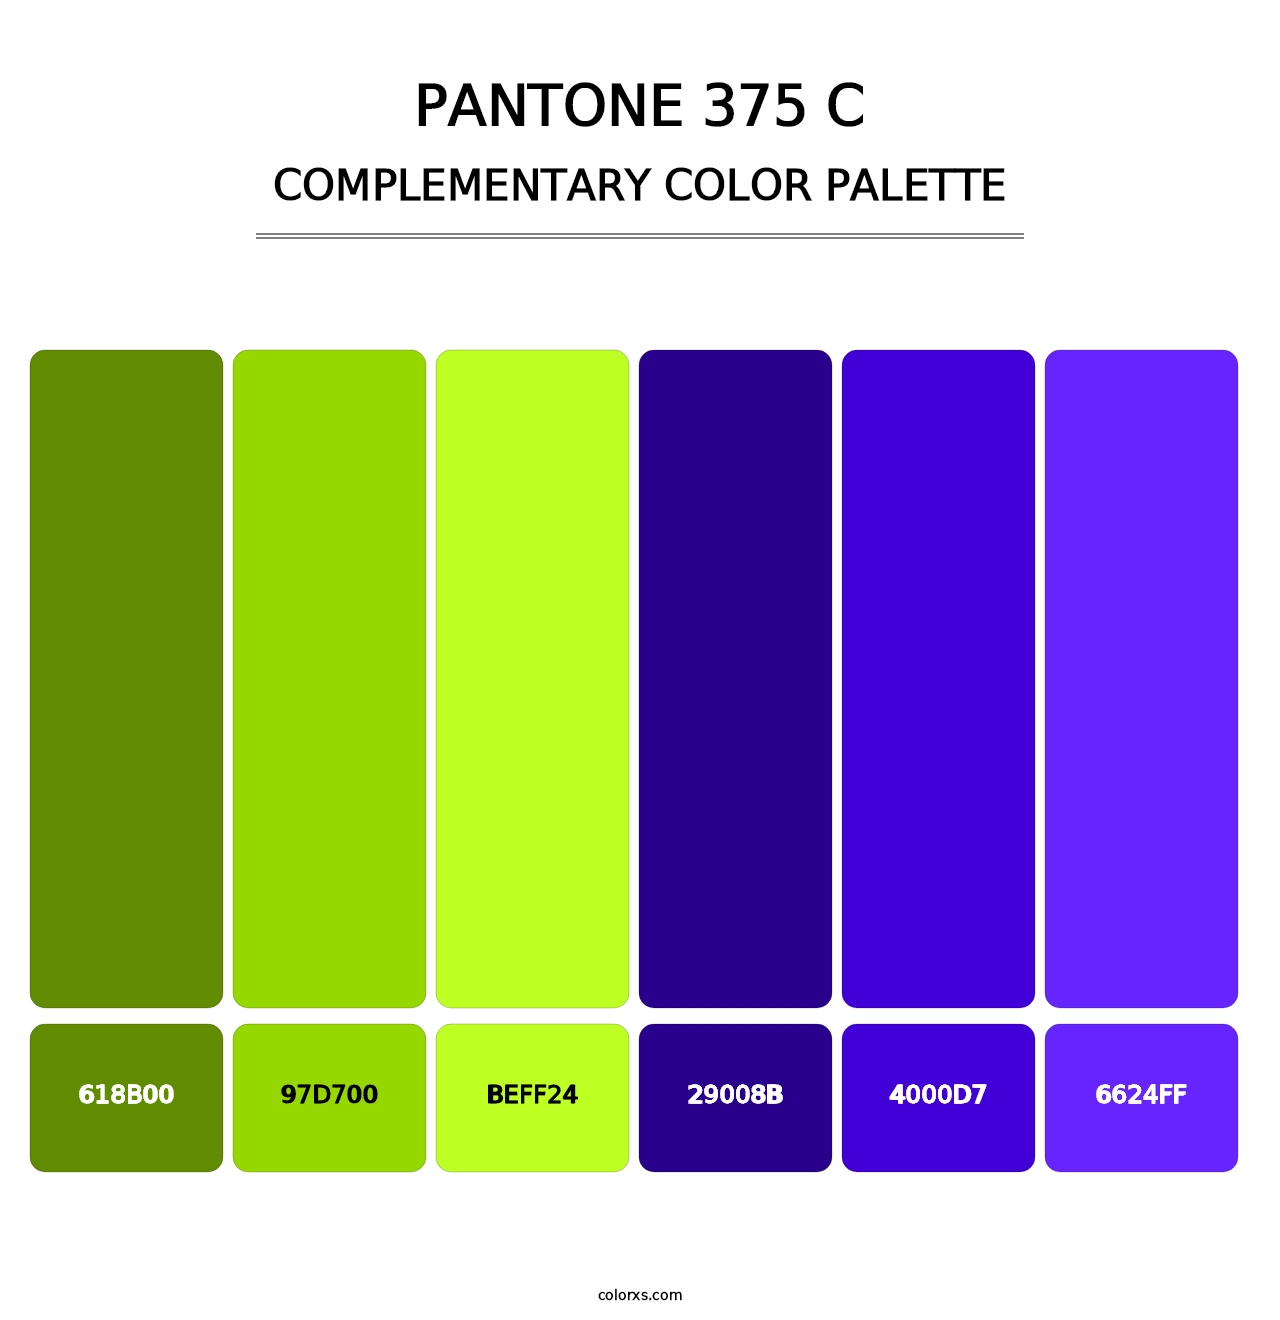 PANTONE 375 C - Complementary Color Palette